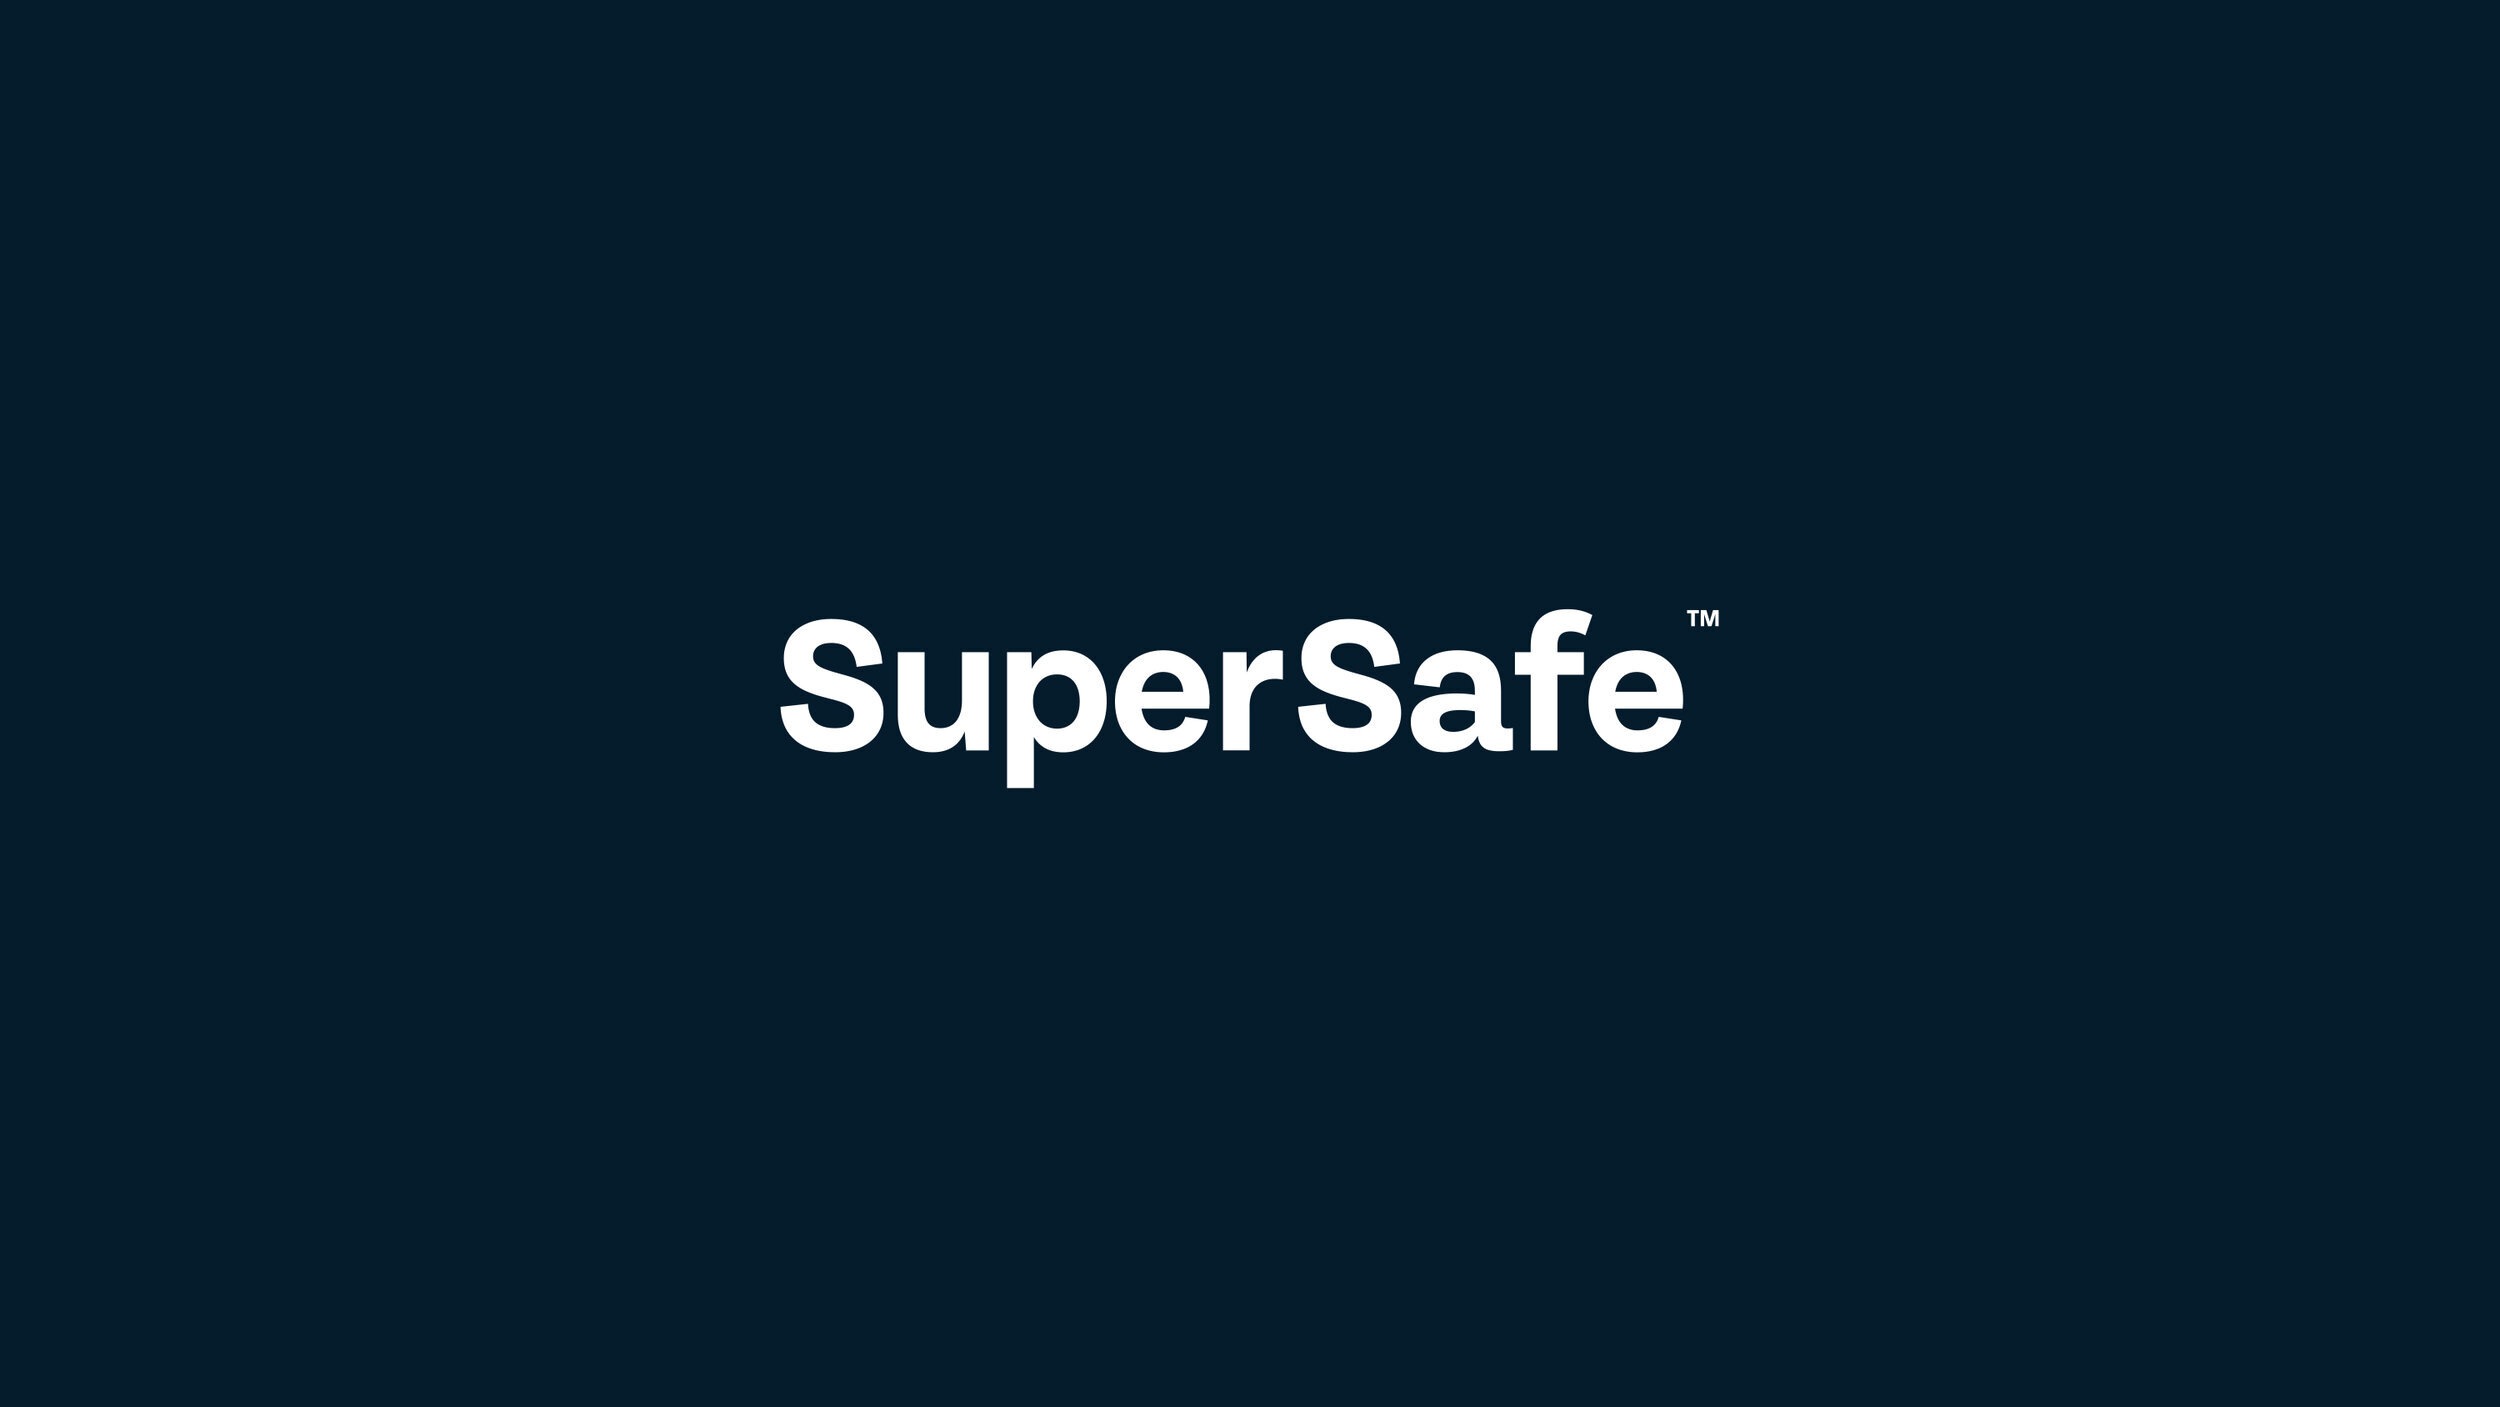 Supersafe_Brand_Logotype.jpeg